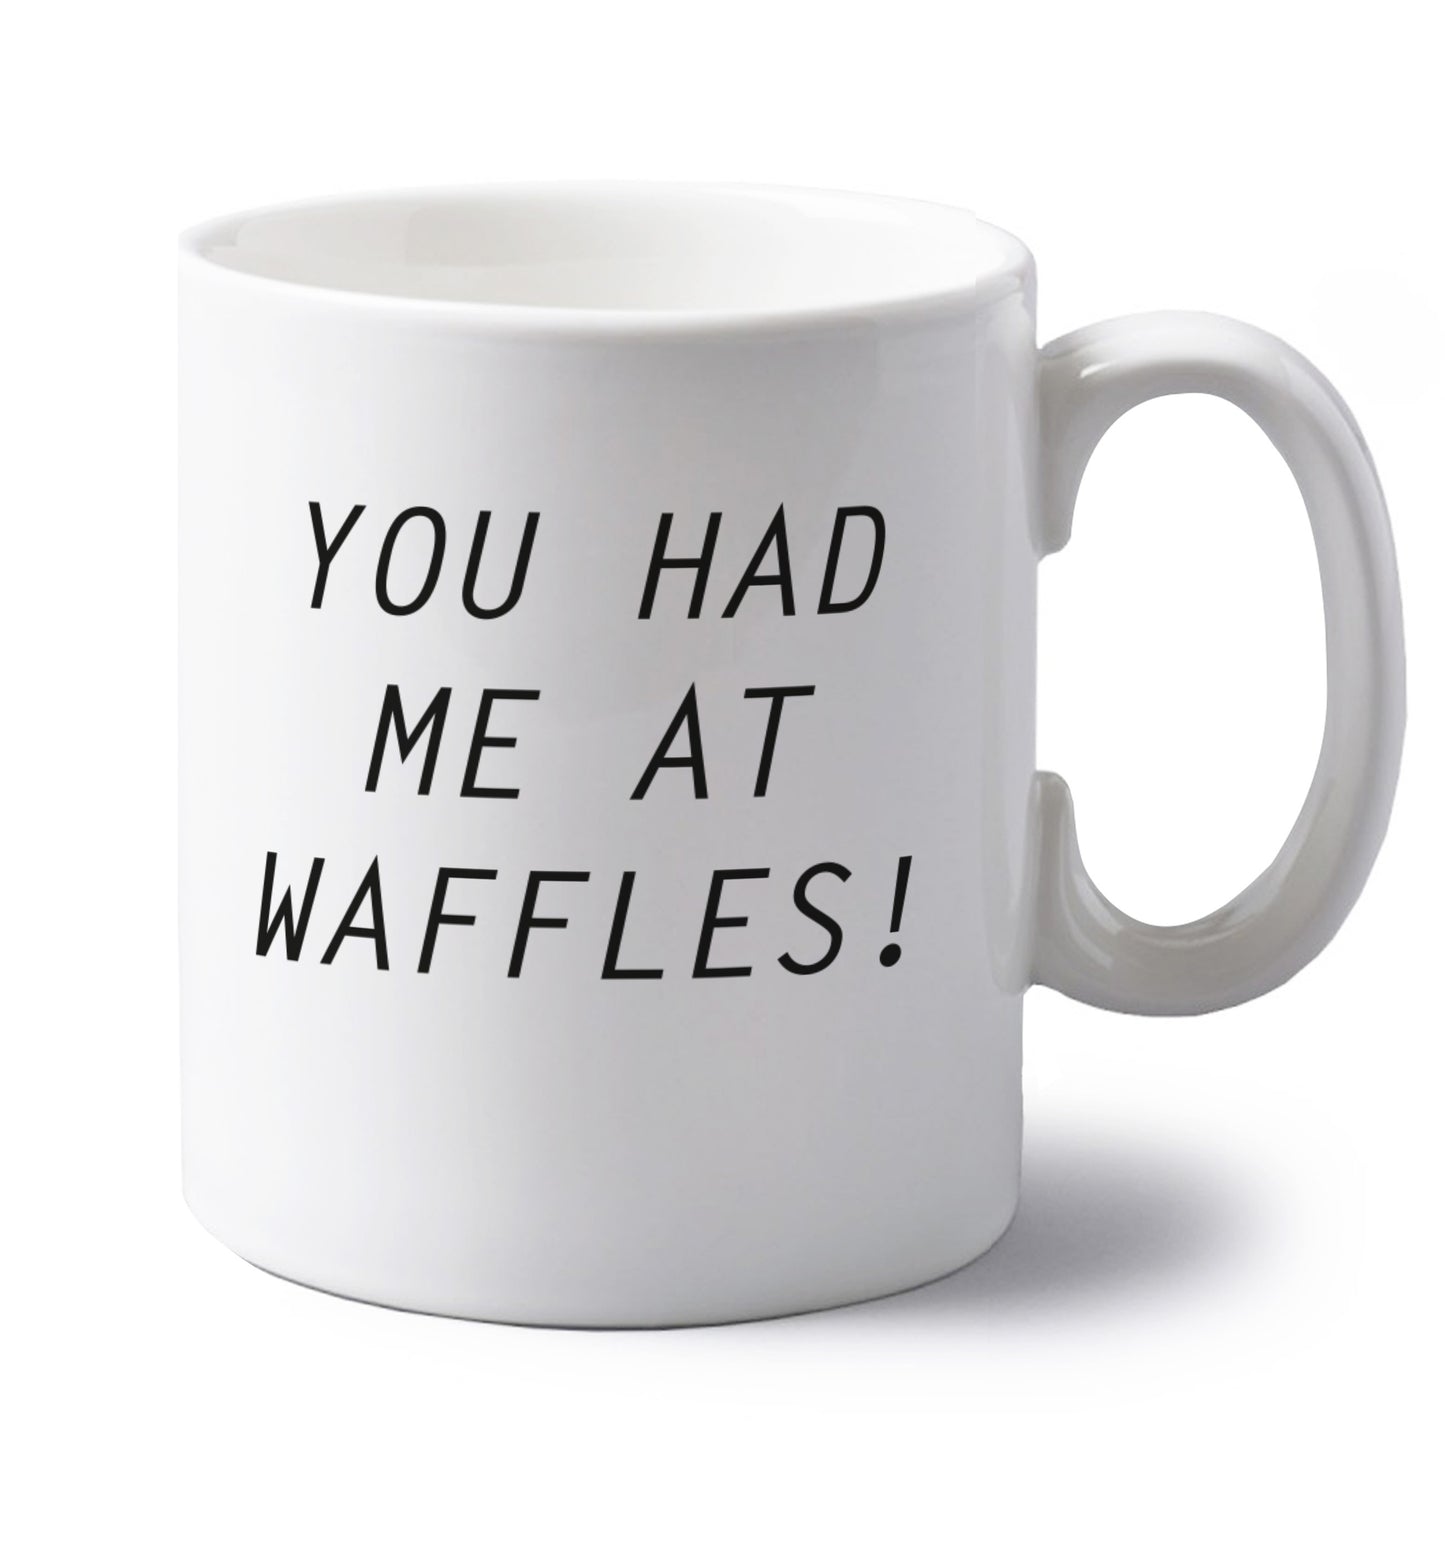 You had me at waffles left handed white ceramic mug 